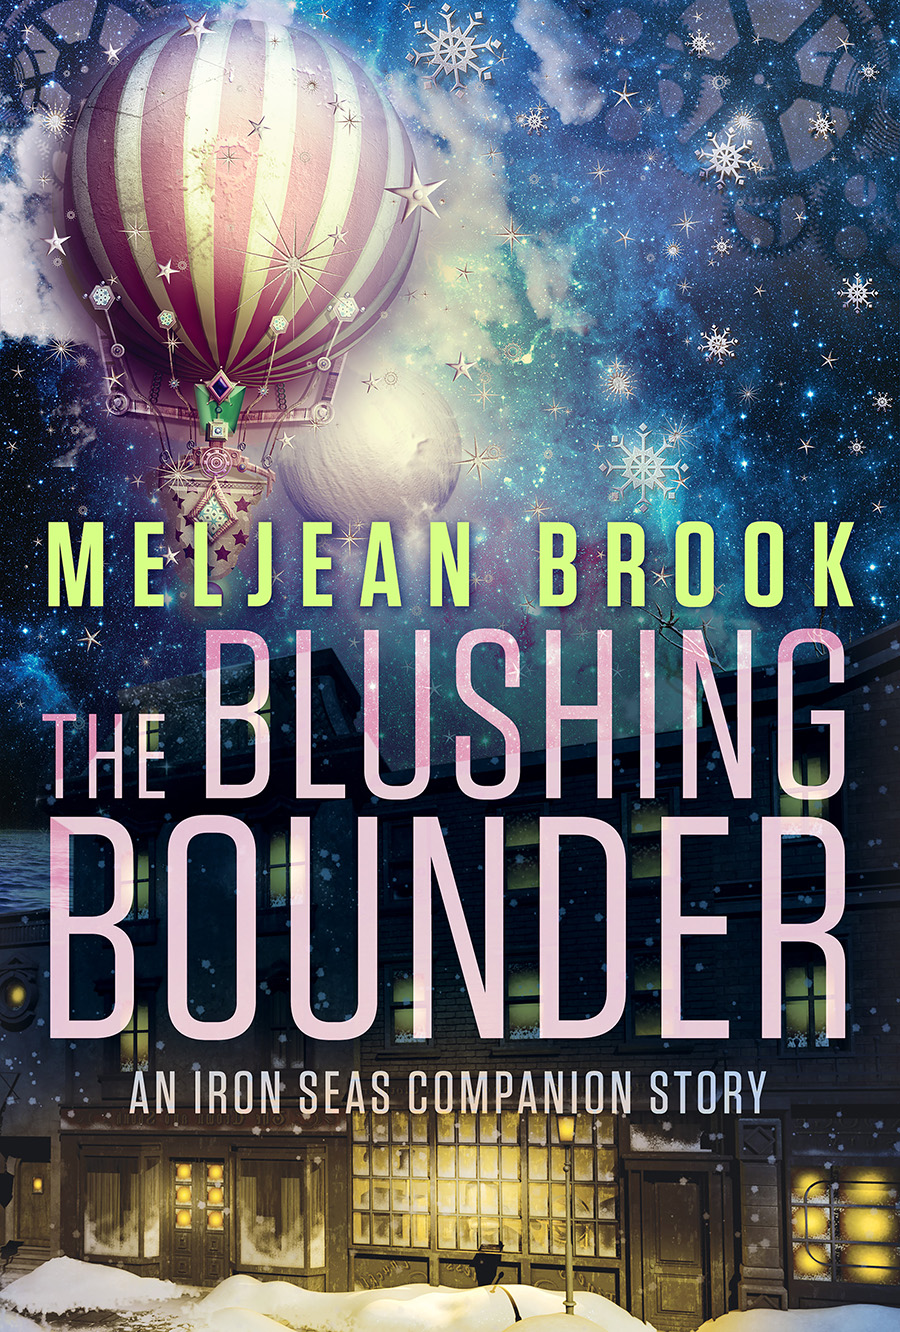 The Blushing Bounder by Meljean Brook